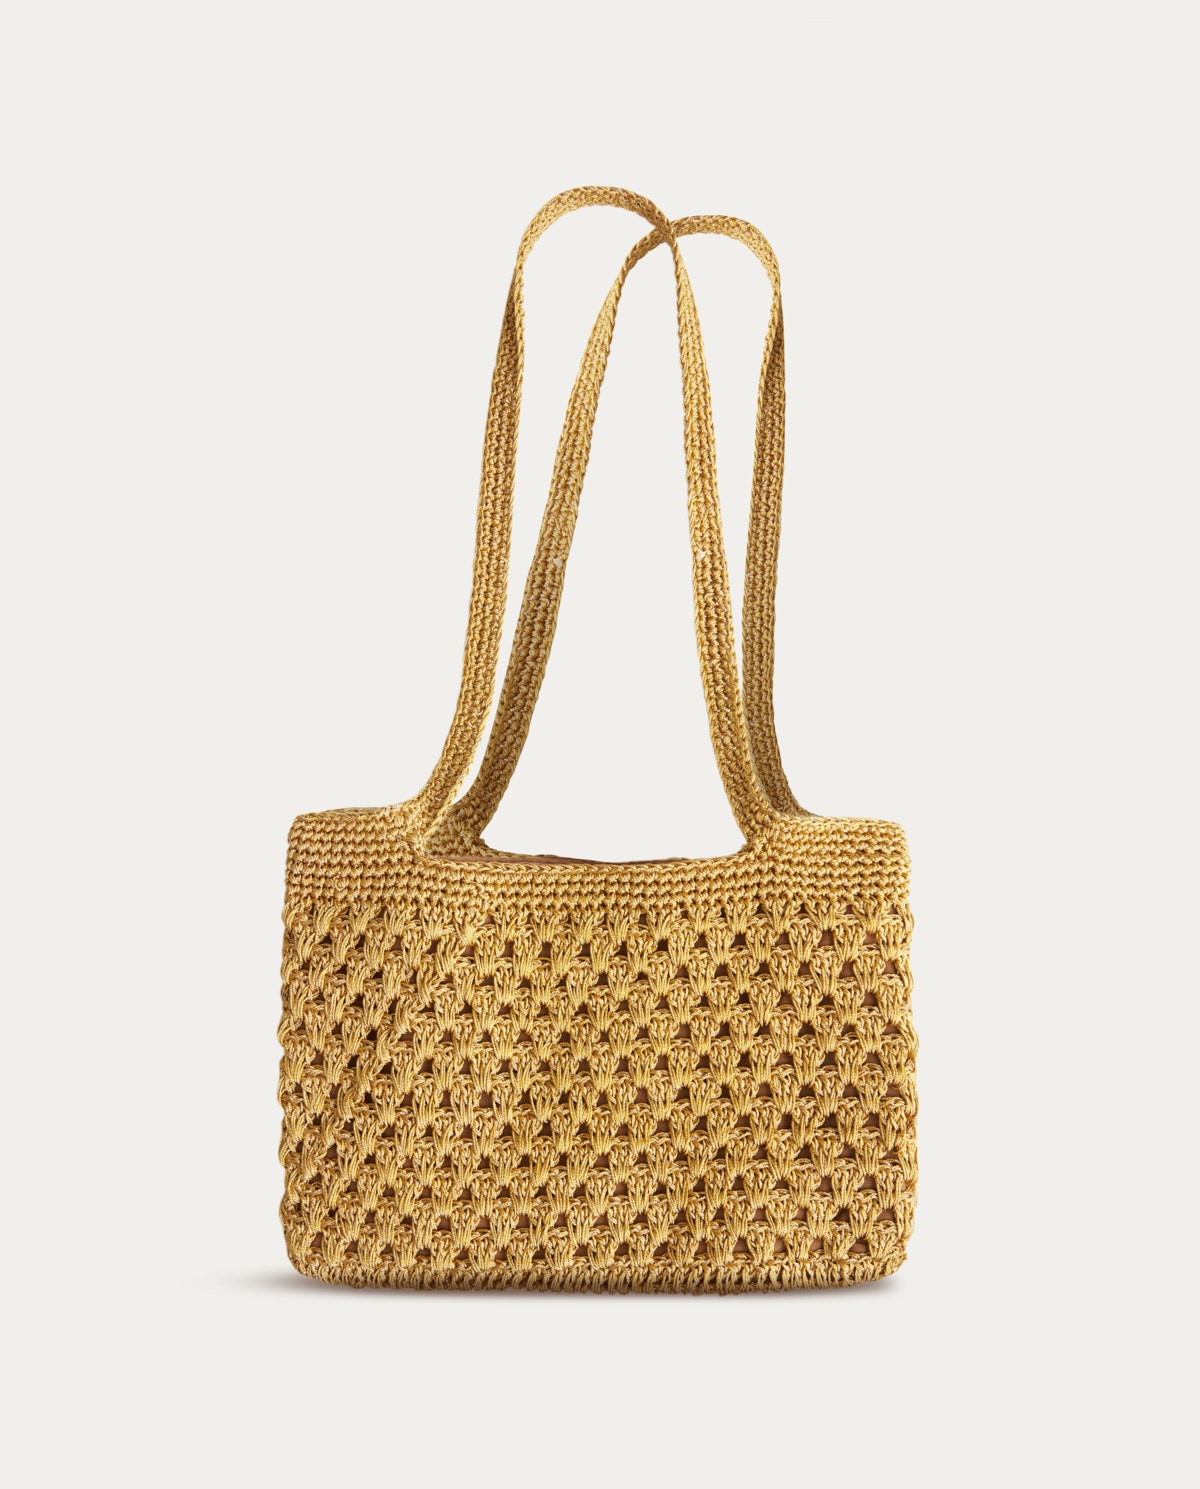 Metallic crochet bag GOLD 1